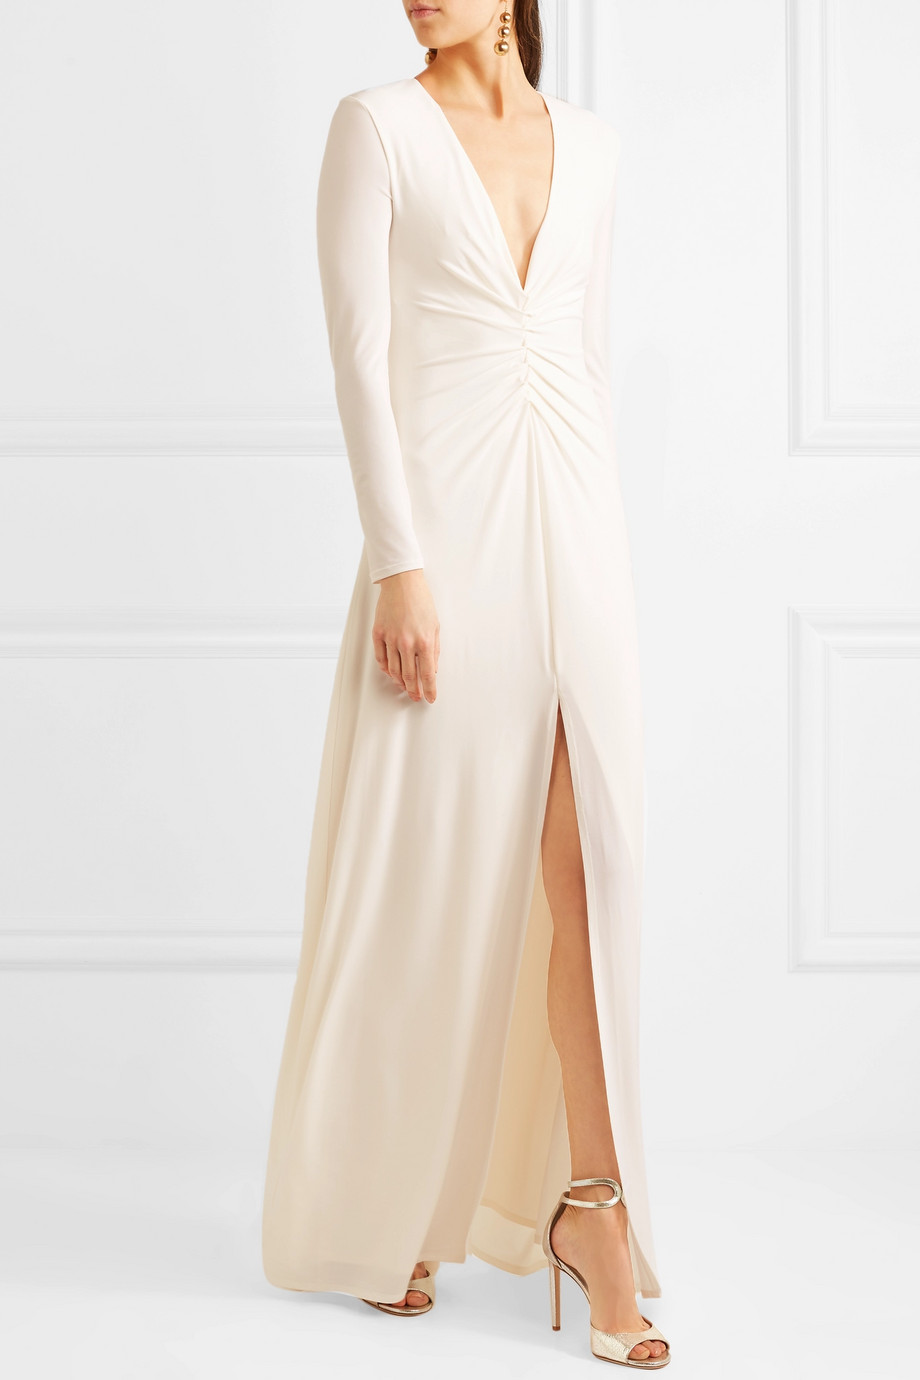 Plus Size Wedding Dresses - Largest Collection - Kleinfeld | Kleinfeld  Bridal